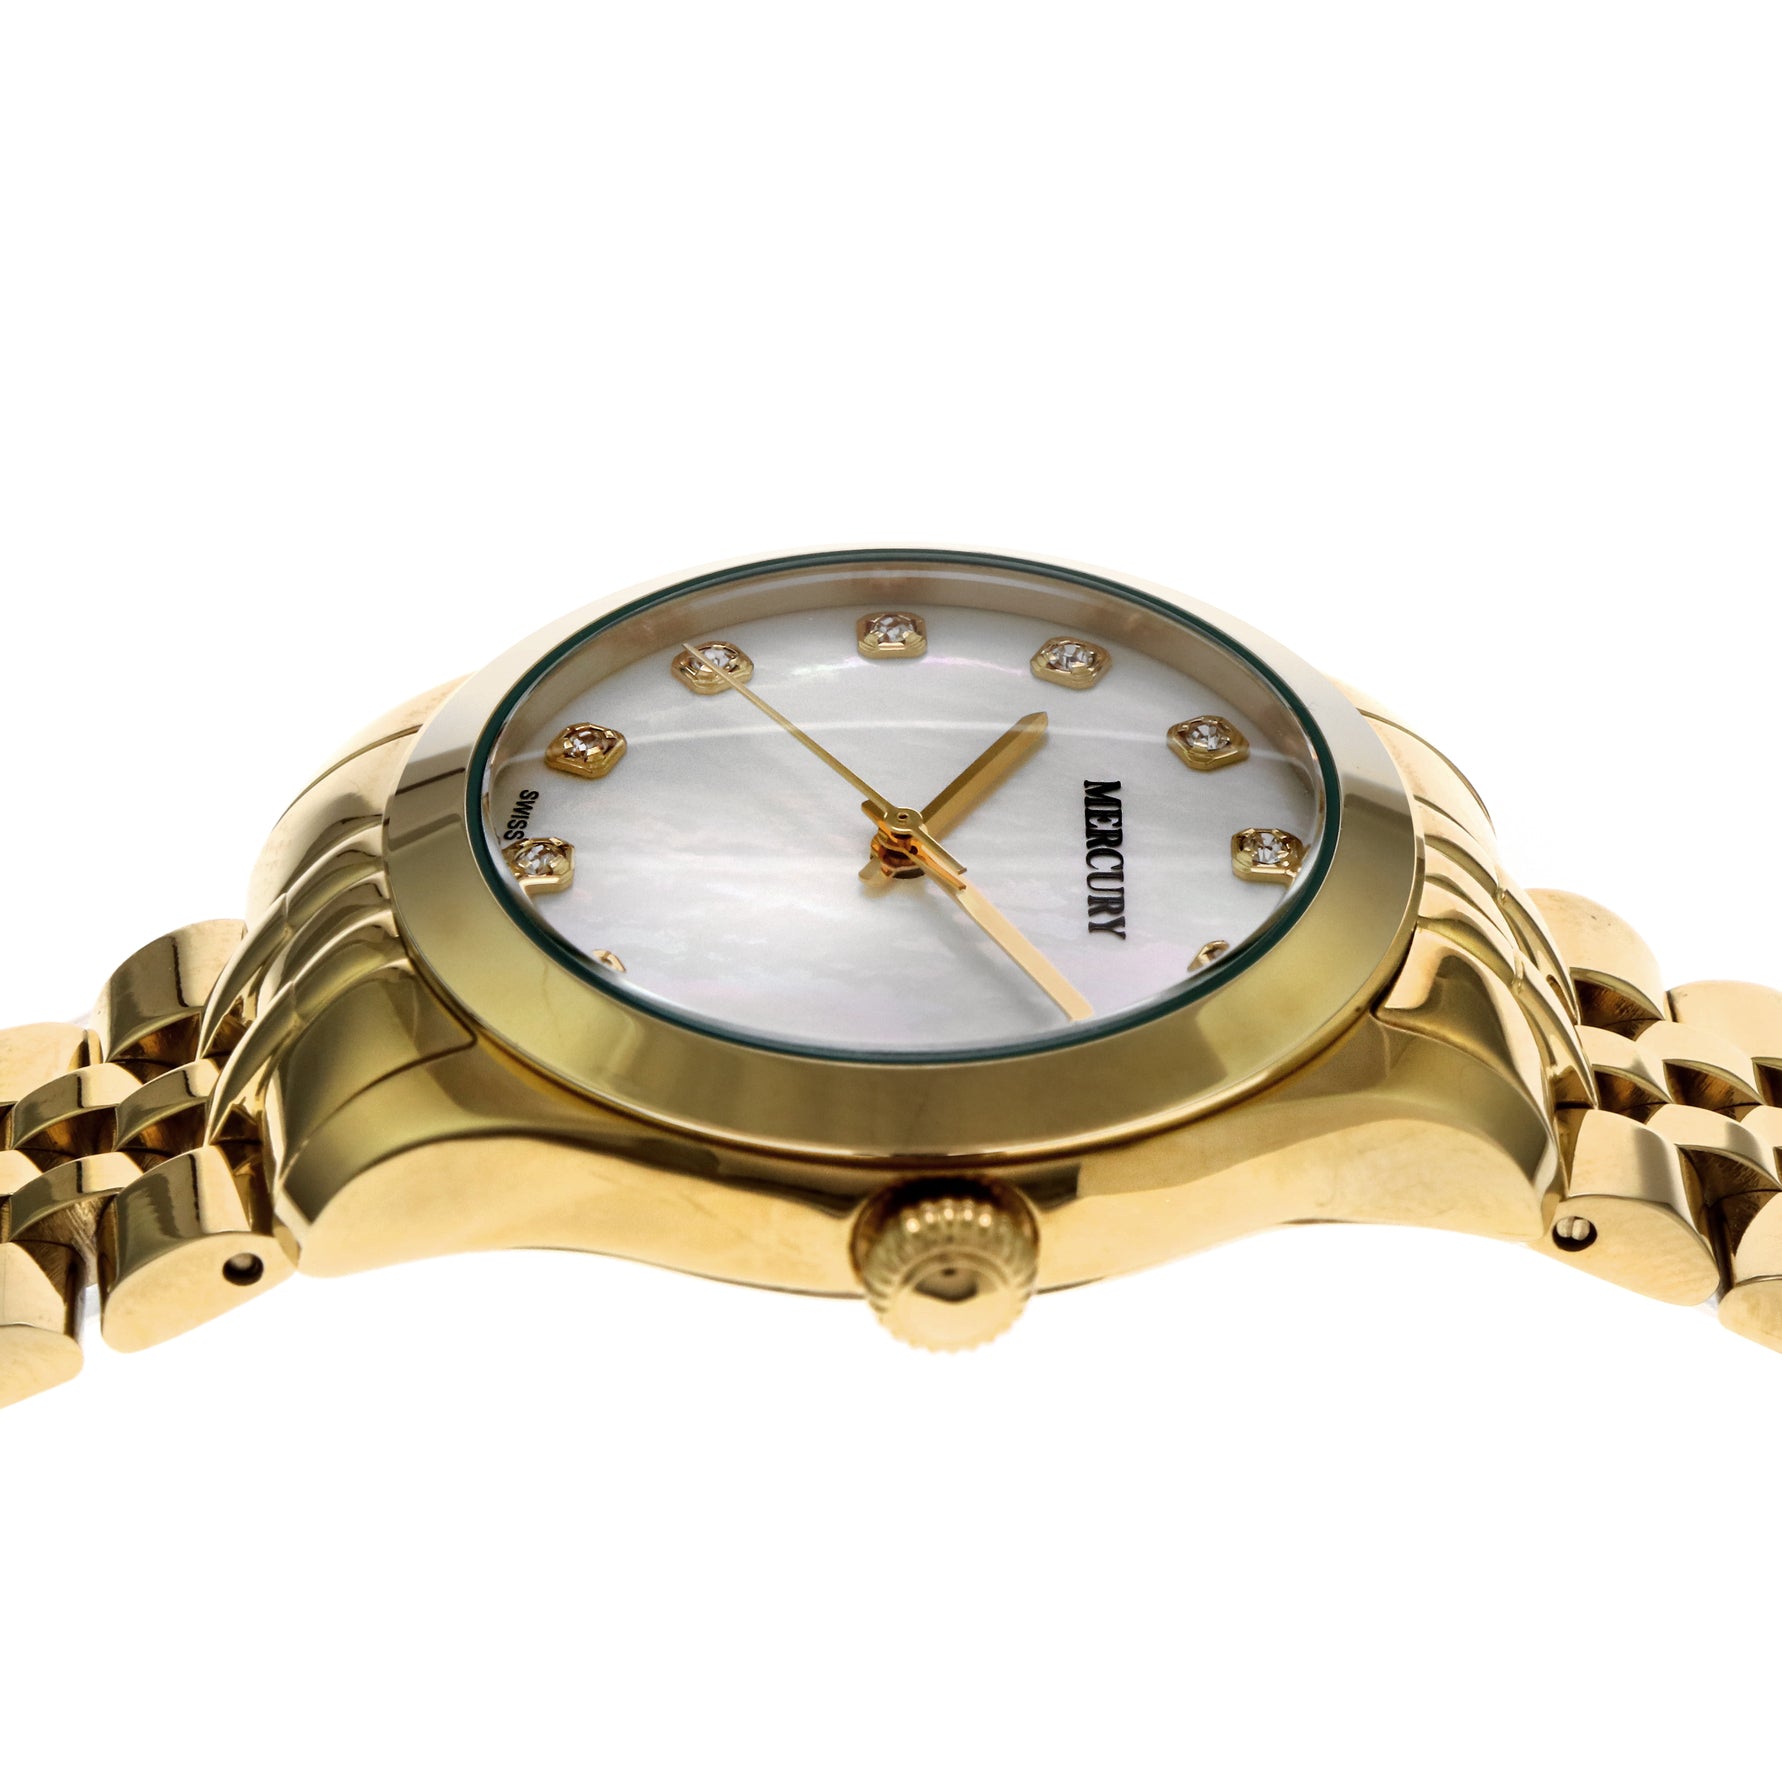 Mercury Women's Swiss Quartz Watch with Pearly White Dial - MER-0022